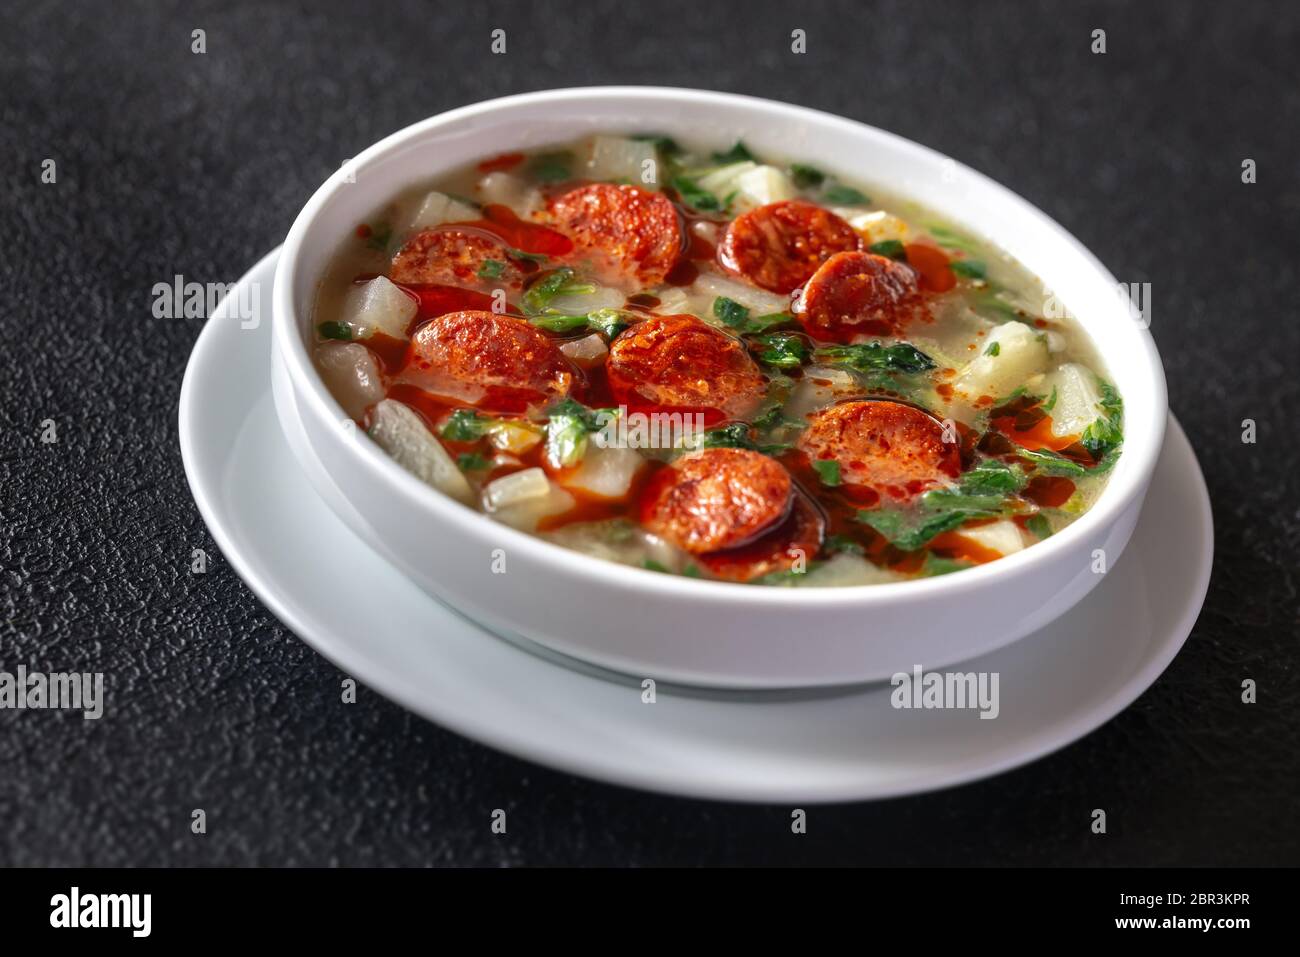 Portion of Portuguese Caldo verde soup Stock Photo